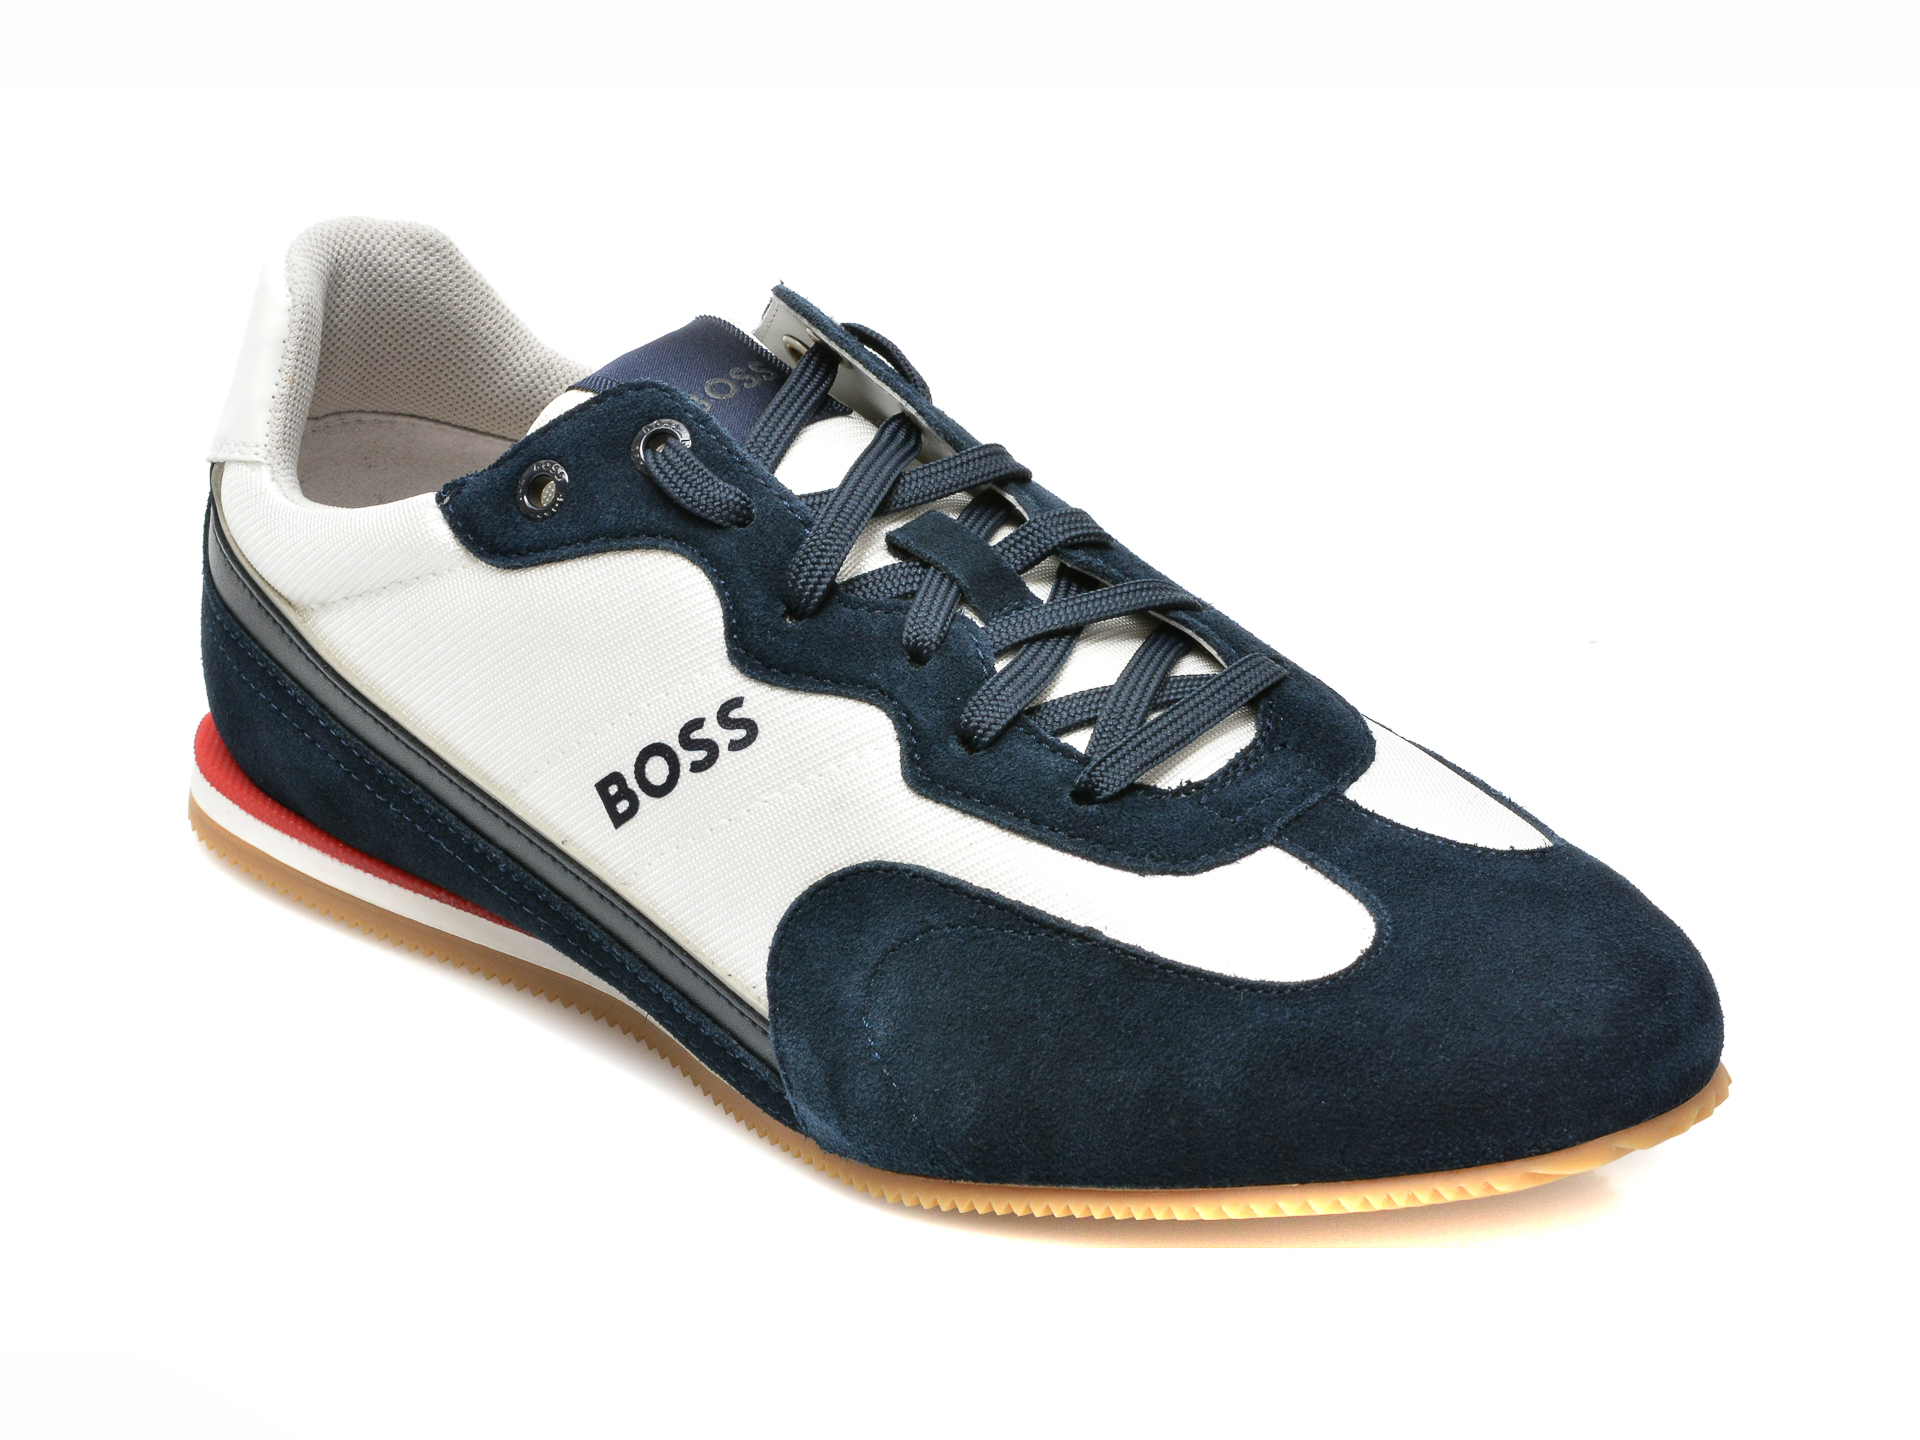 Pantofi sport HUGO BOSS bleumarin, 4551, din material textil si piele naturala /barbati/pantofi